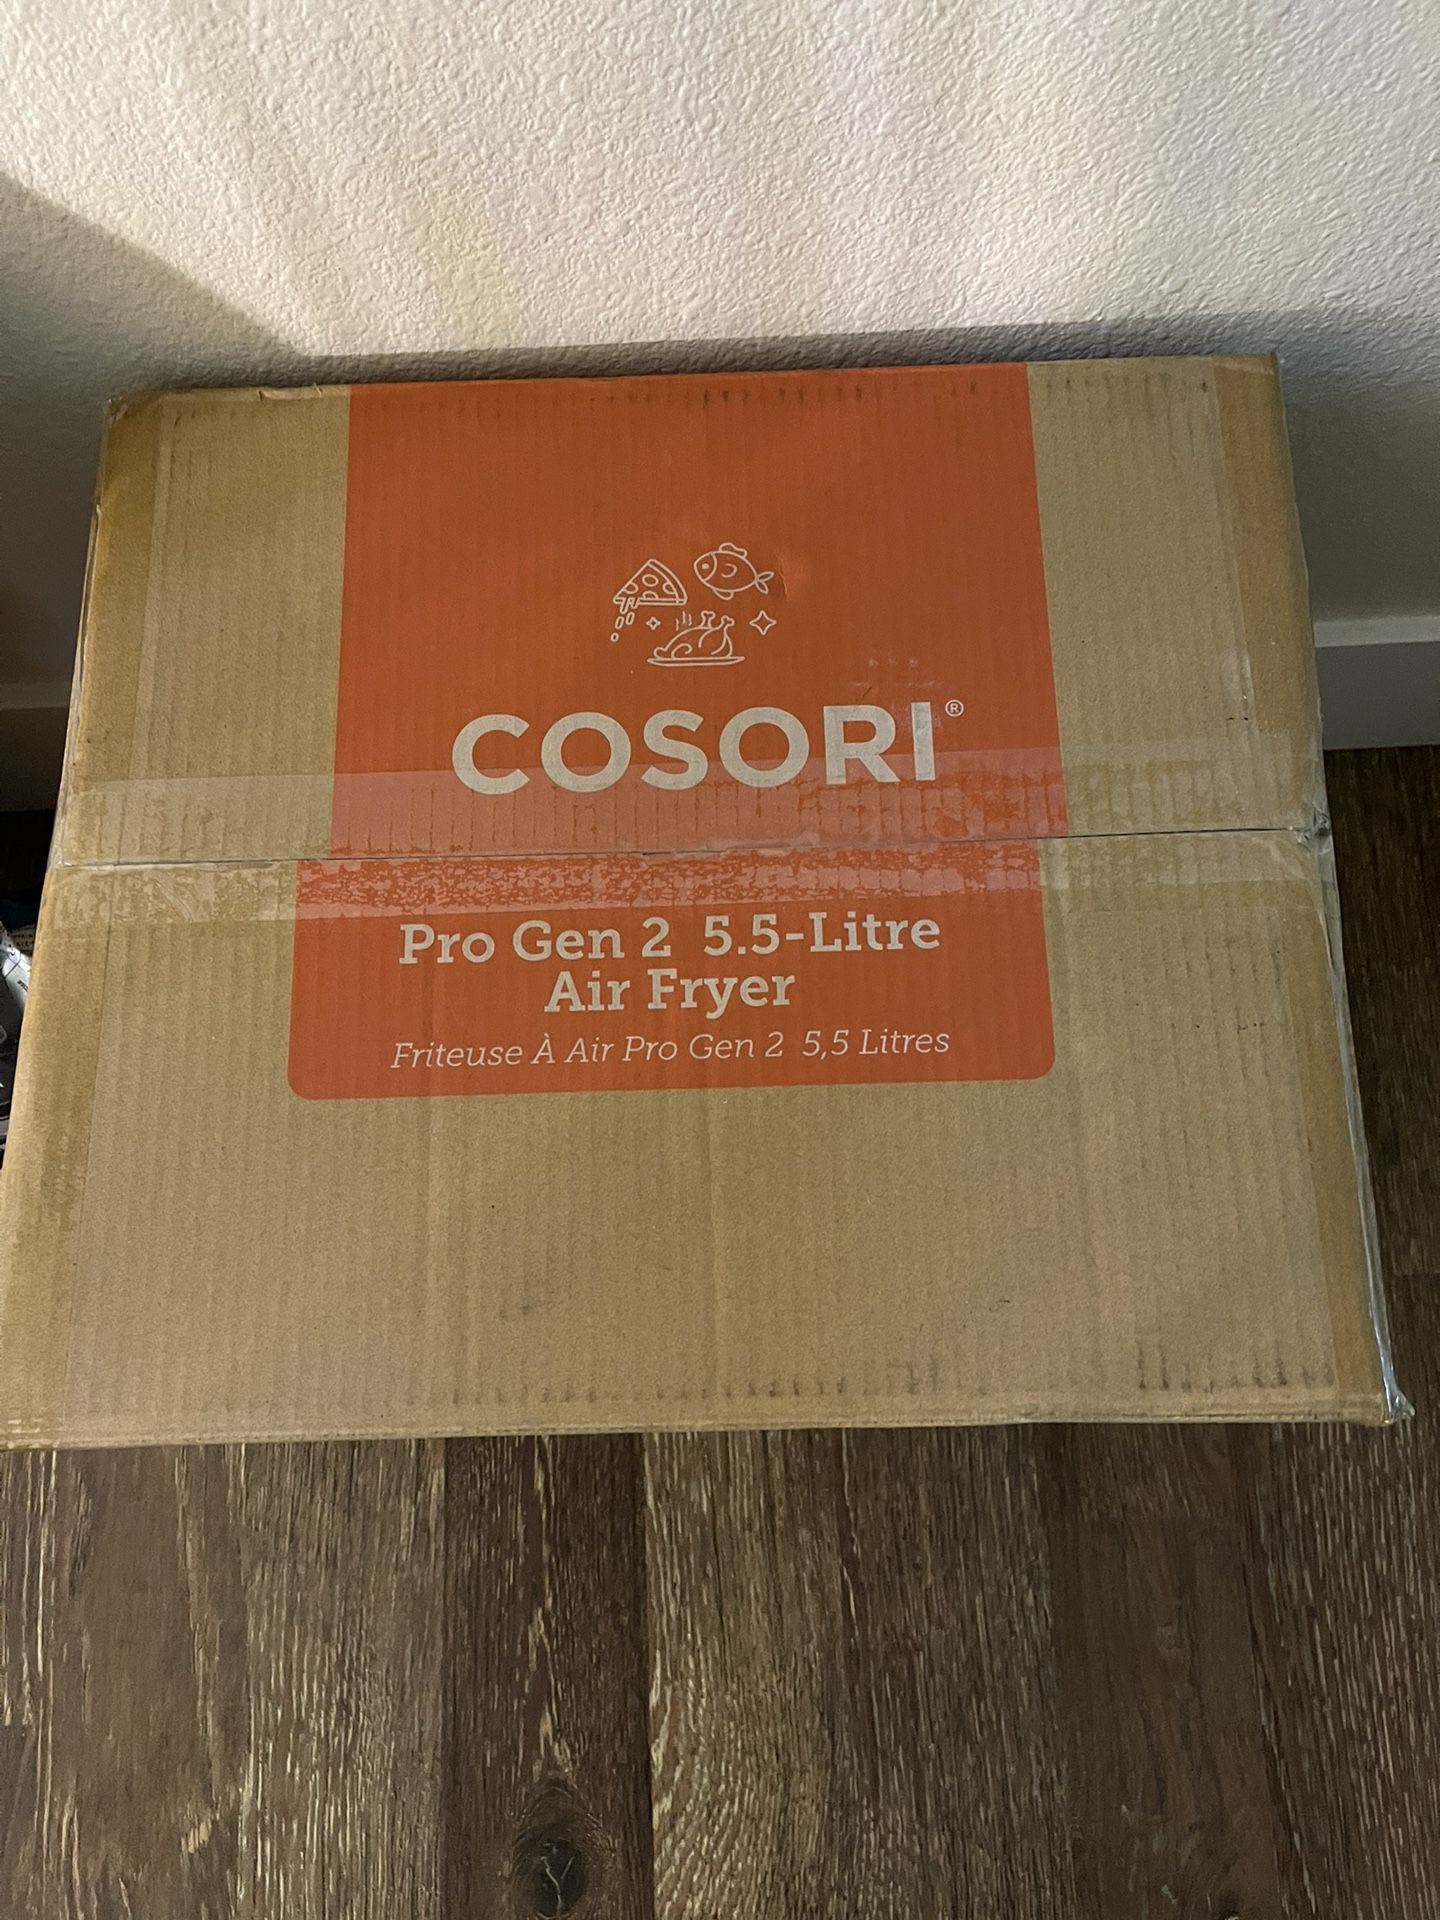 COSORI Pro II 5.8-qt. Smart Air Fryer, White - Yahoo Shopping